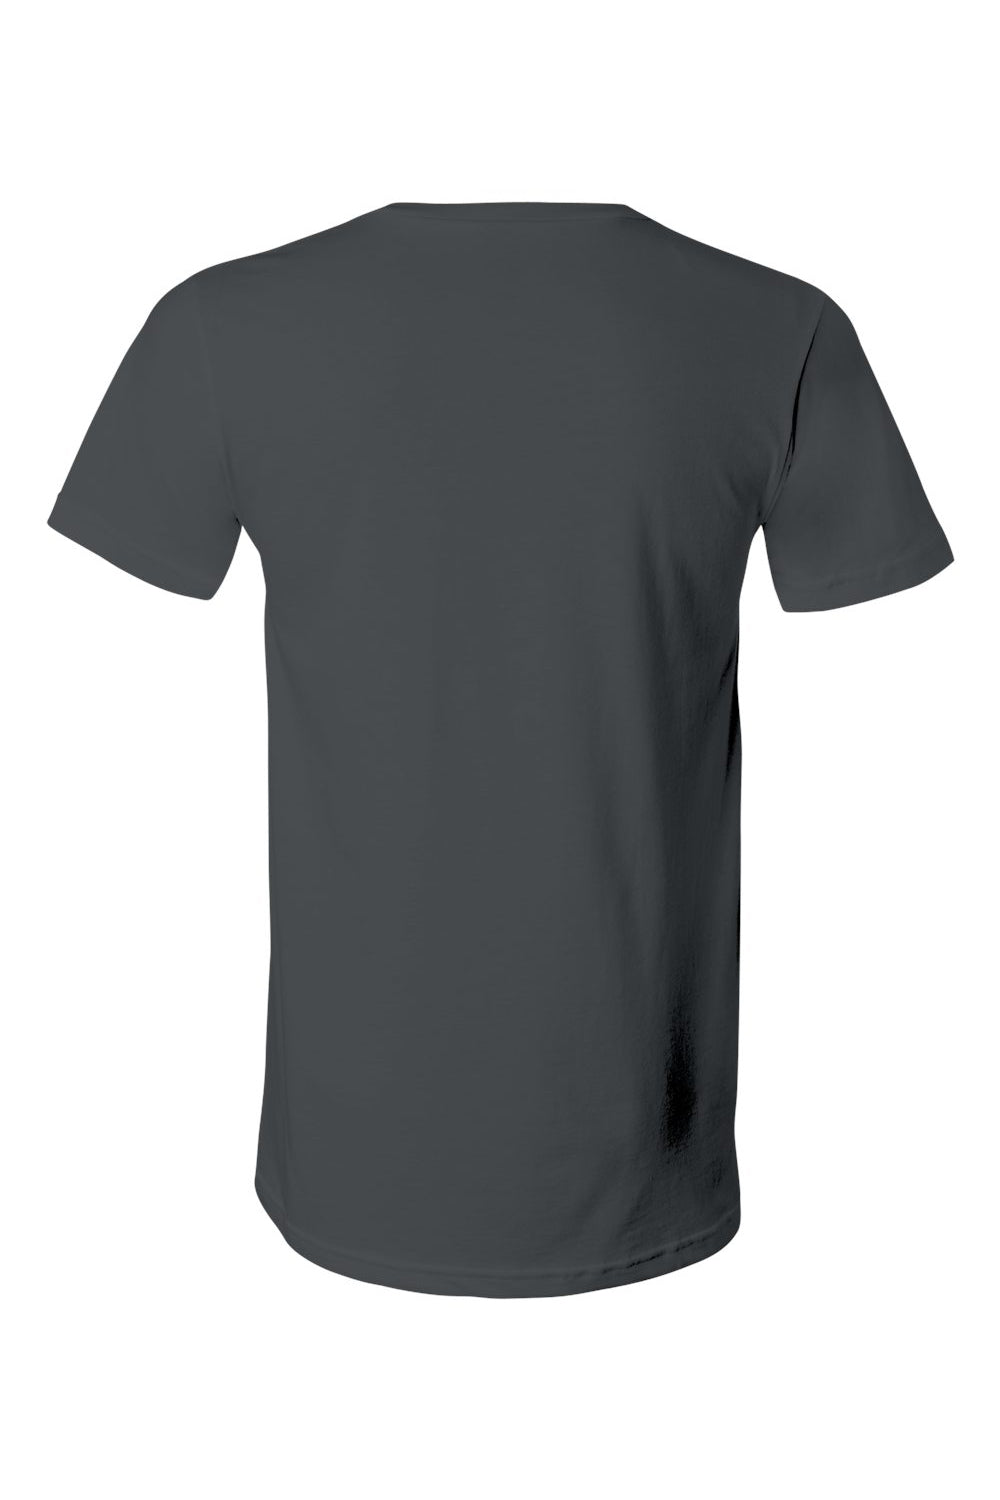 Bella + Canvas BC3005/3005/3655C Mens Jersey Short Sleeve V-Neck T-Shirt Asphalt Grey Flat Back